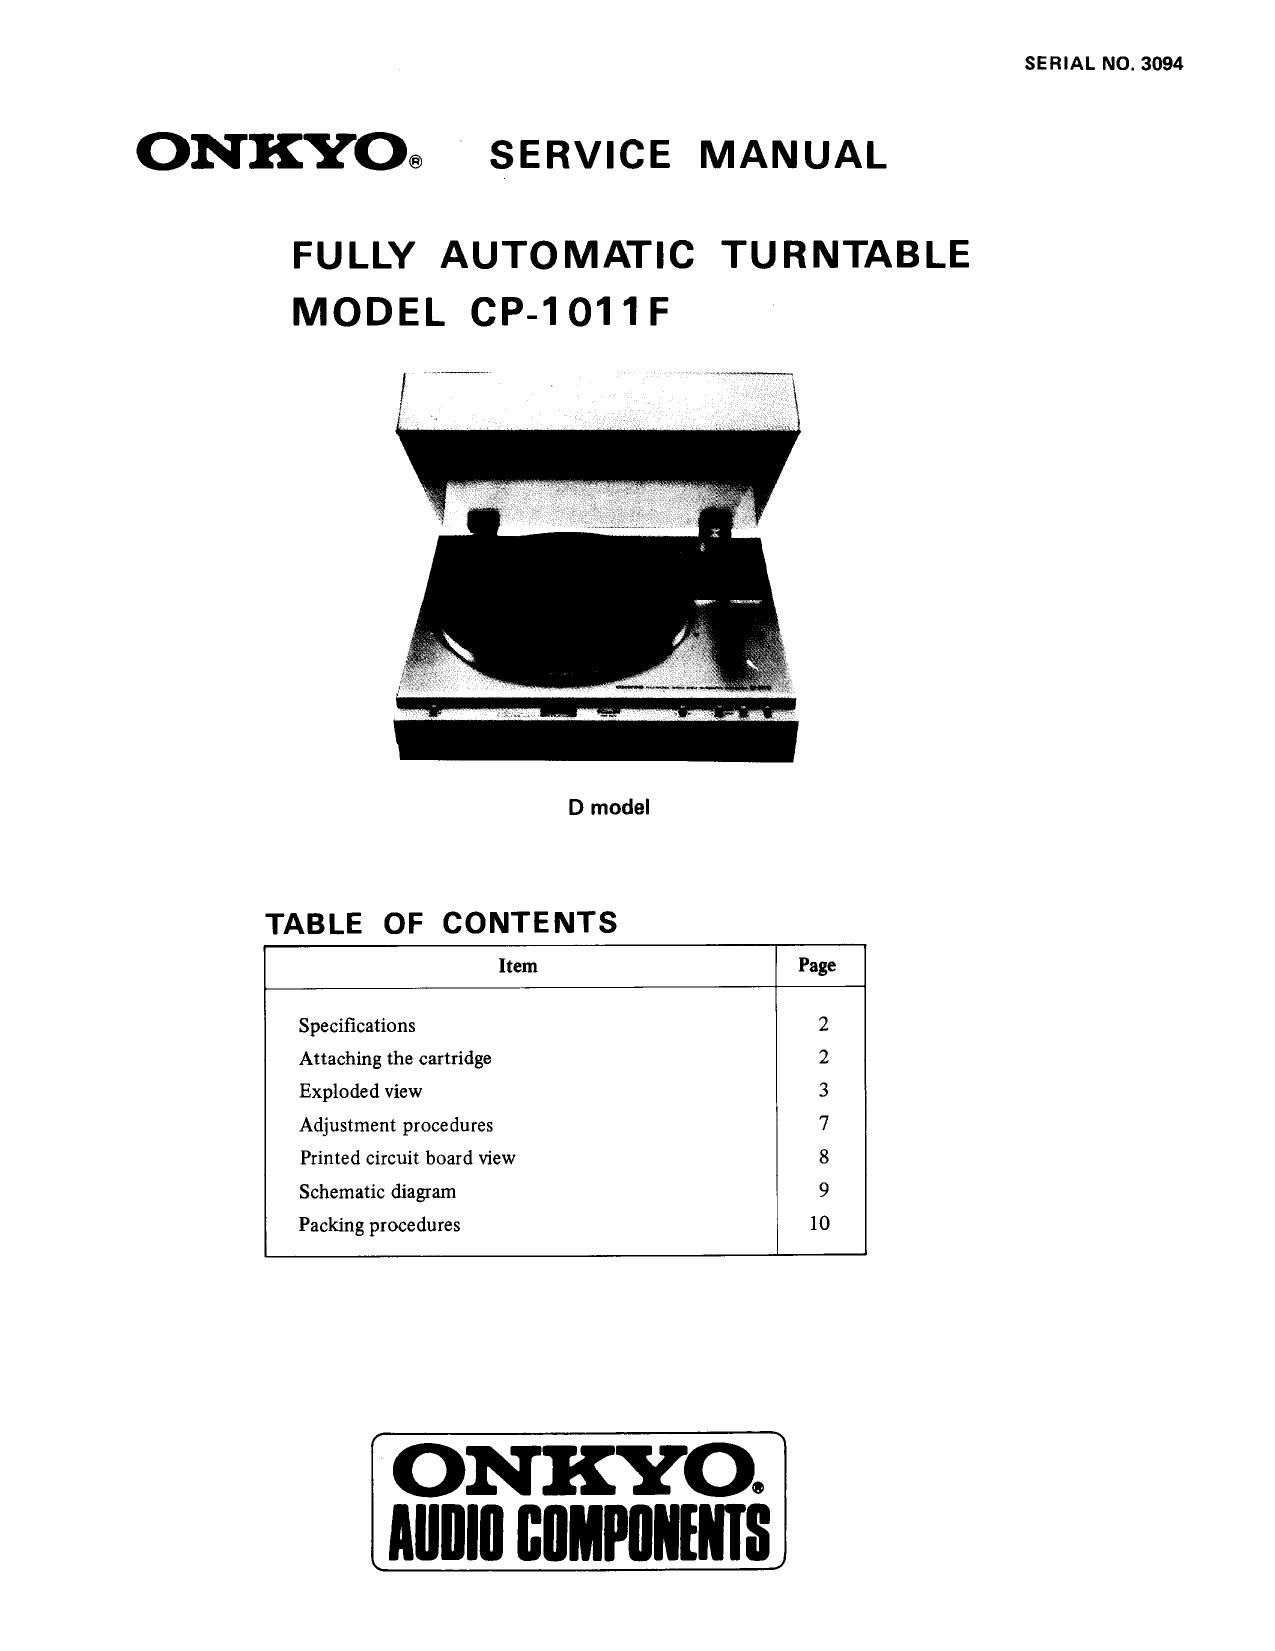 Onkyo CP 1011 F Service Manual